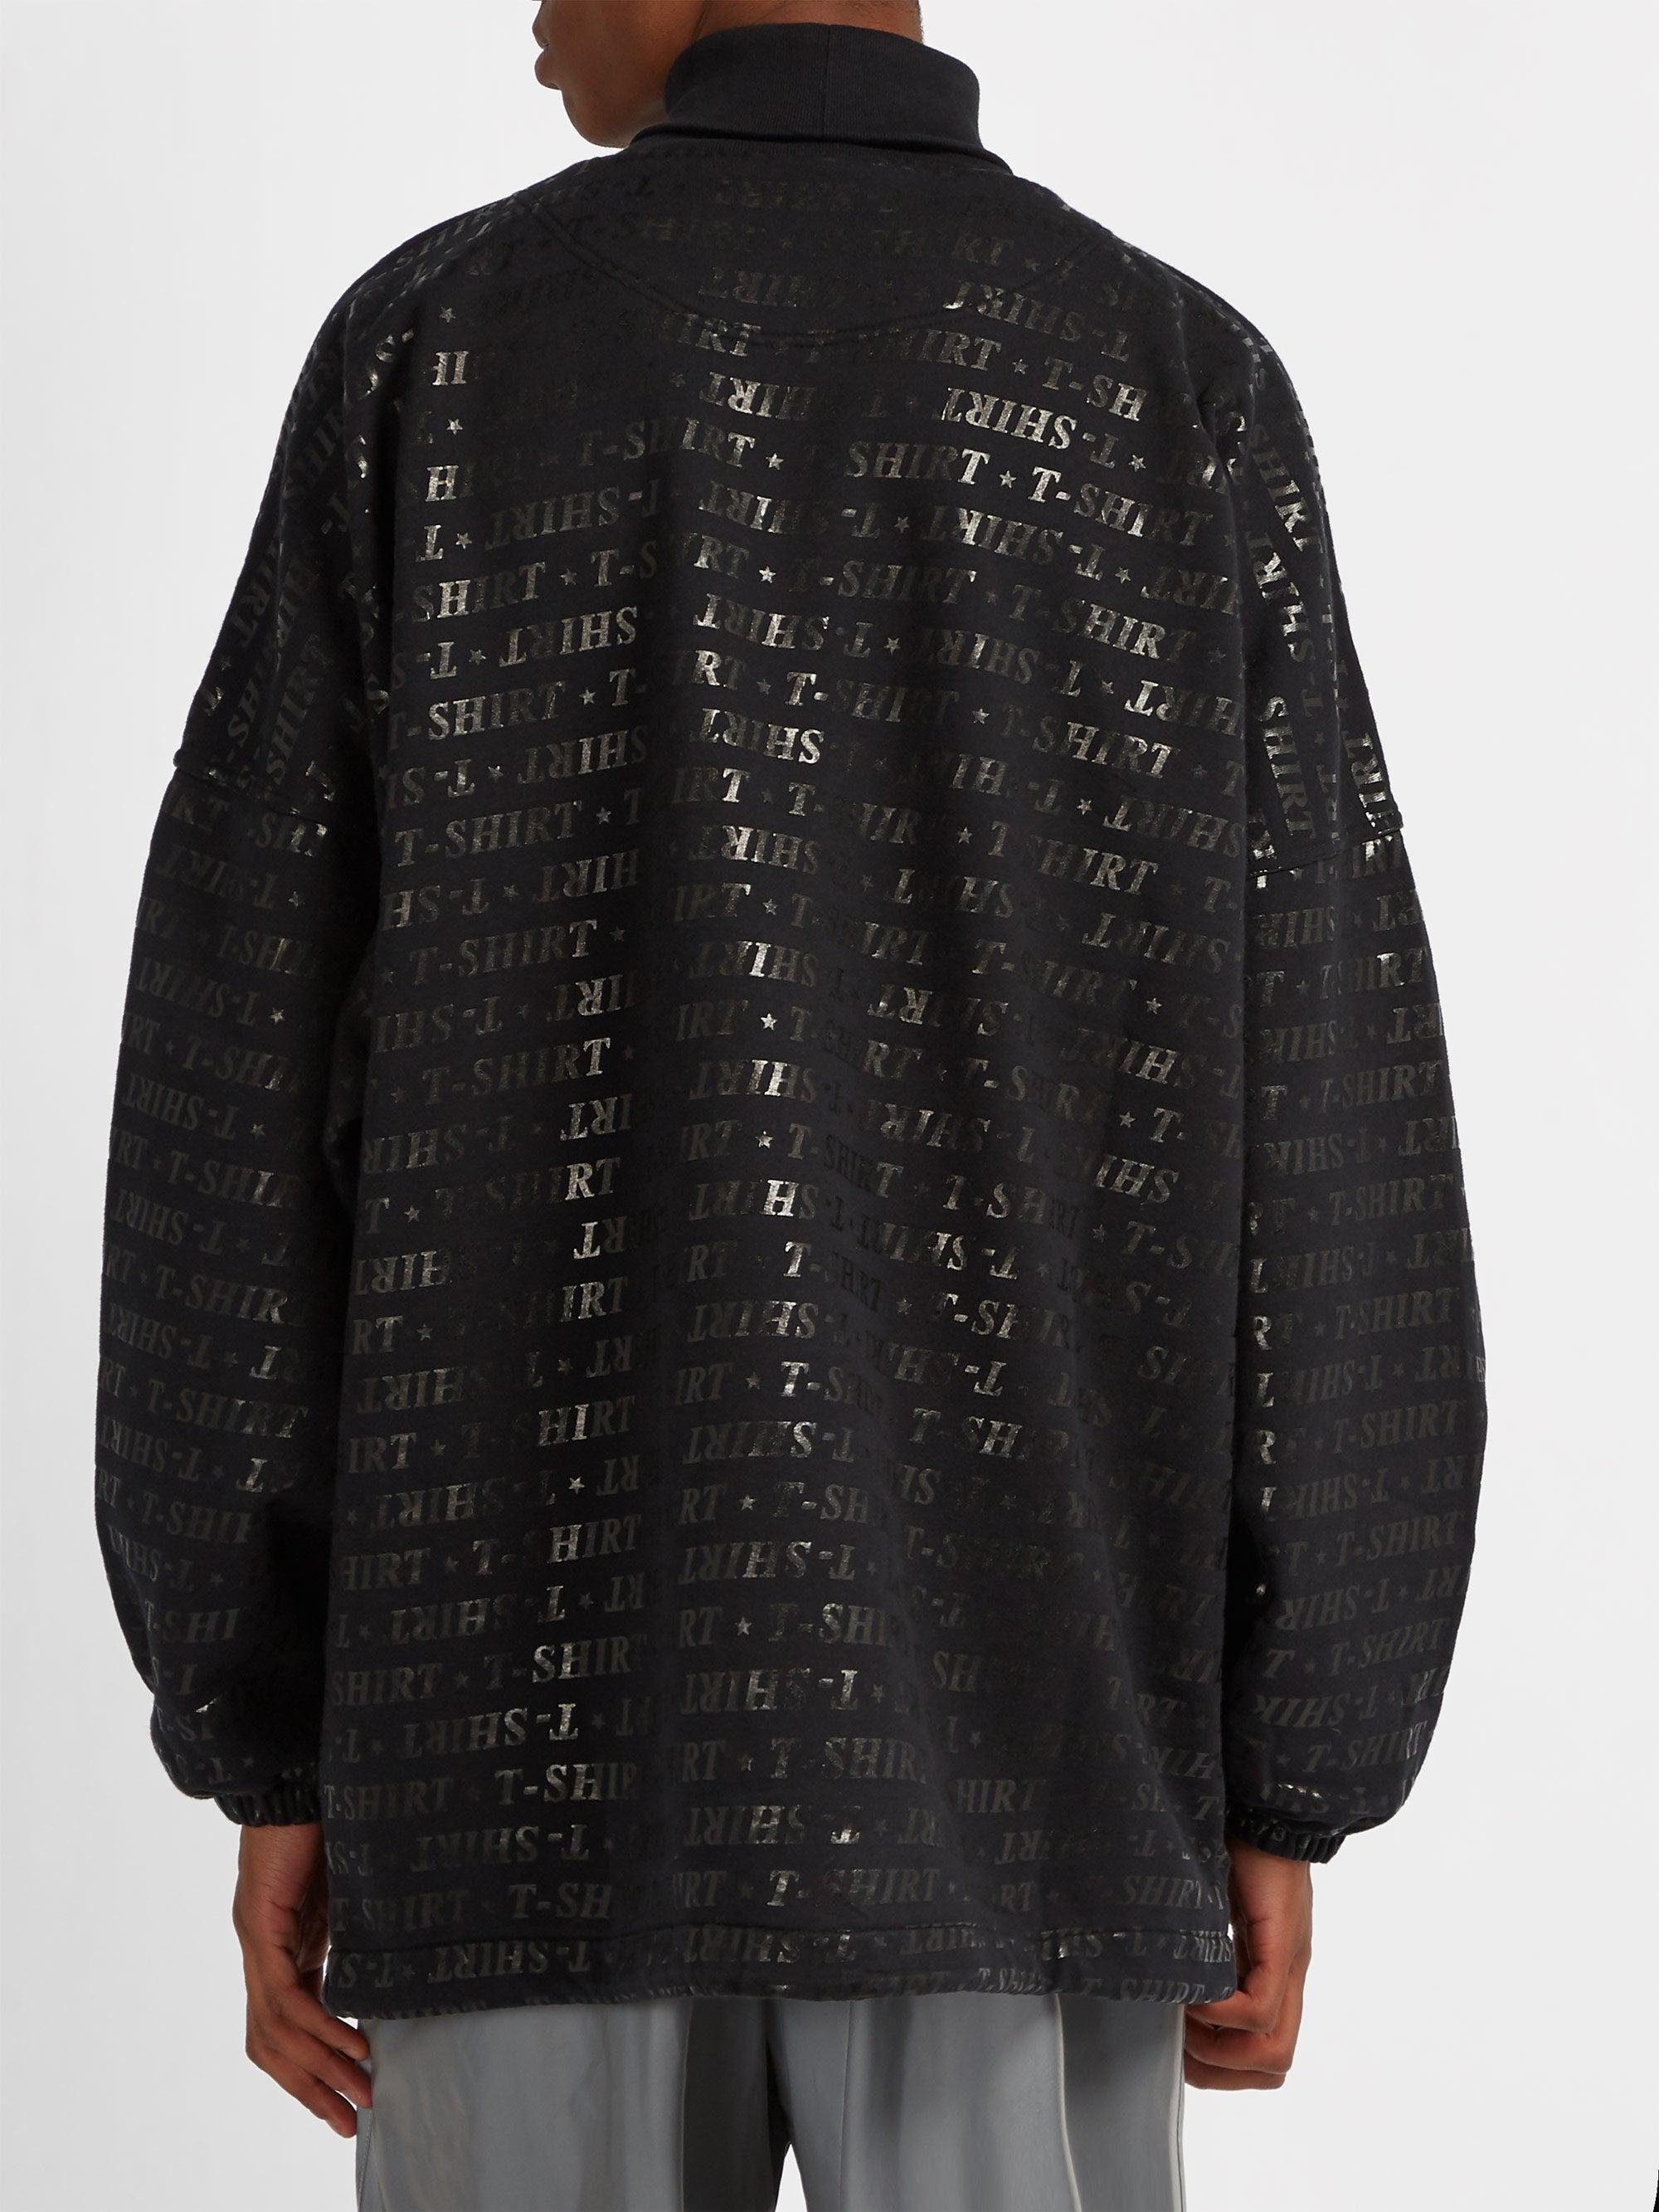 Balenciaga Oversized Printed Cotton-blend Sweatshirt in Black for Men - Lyst